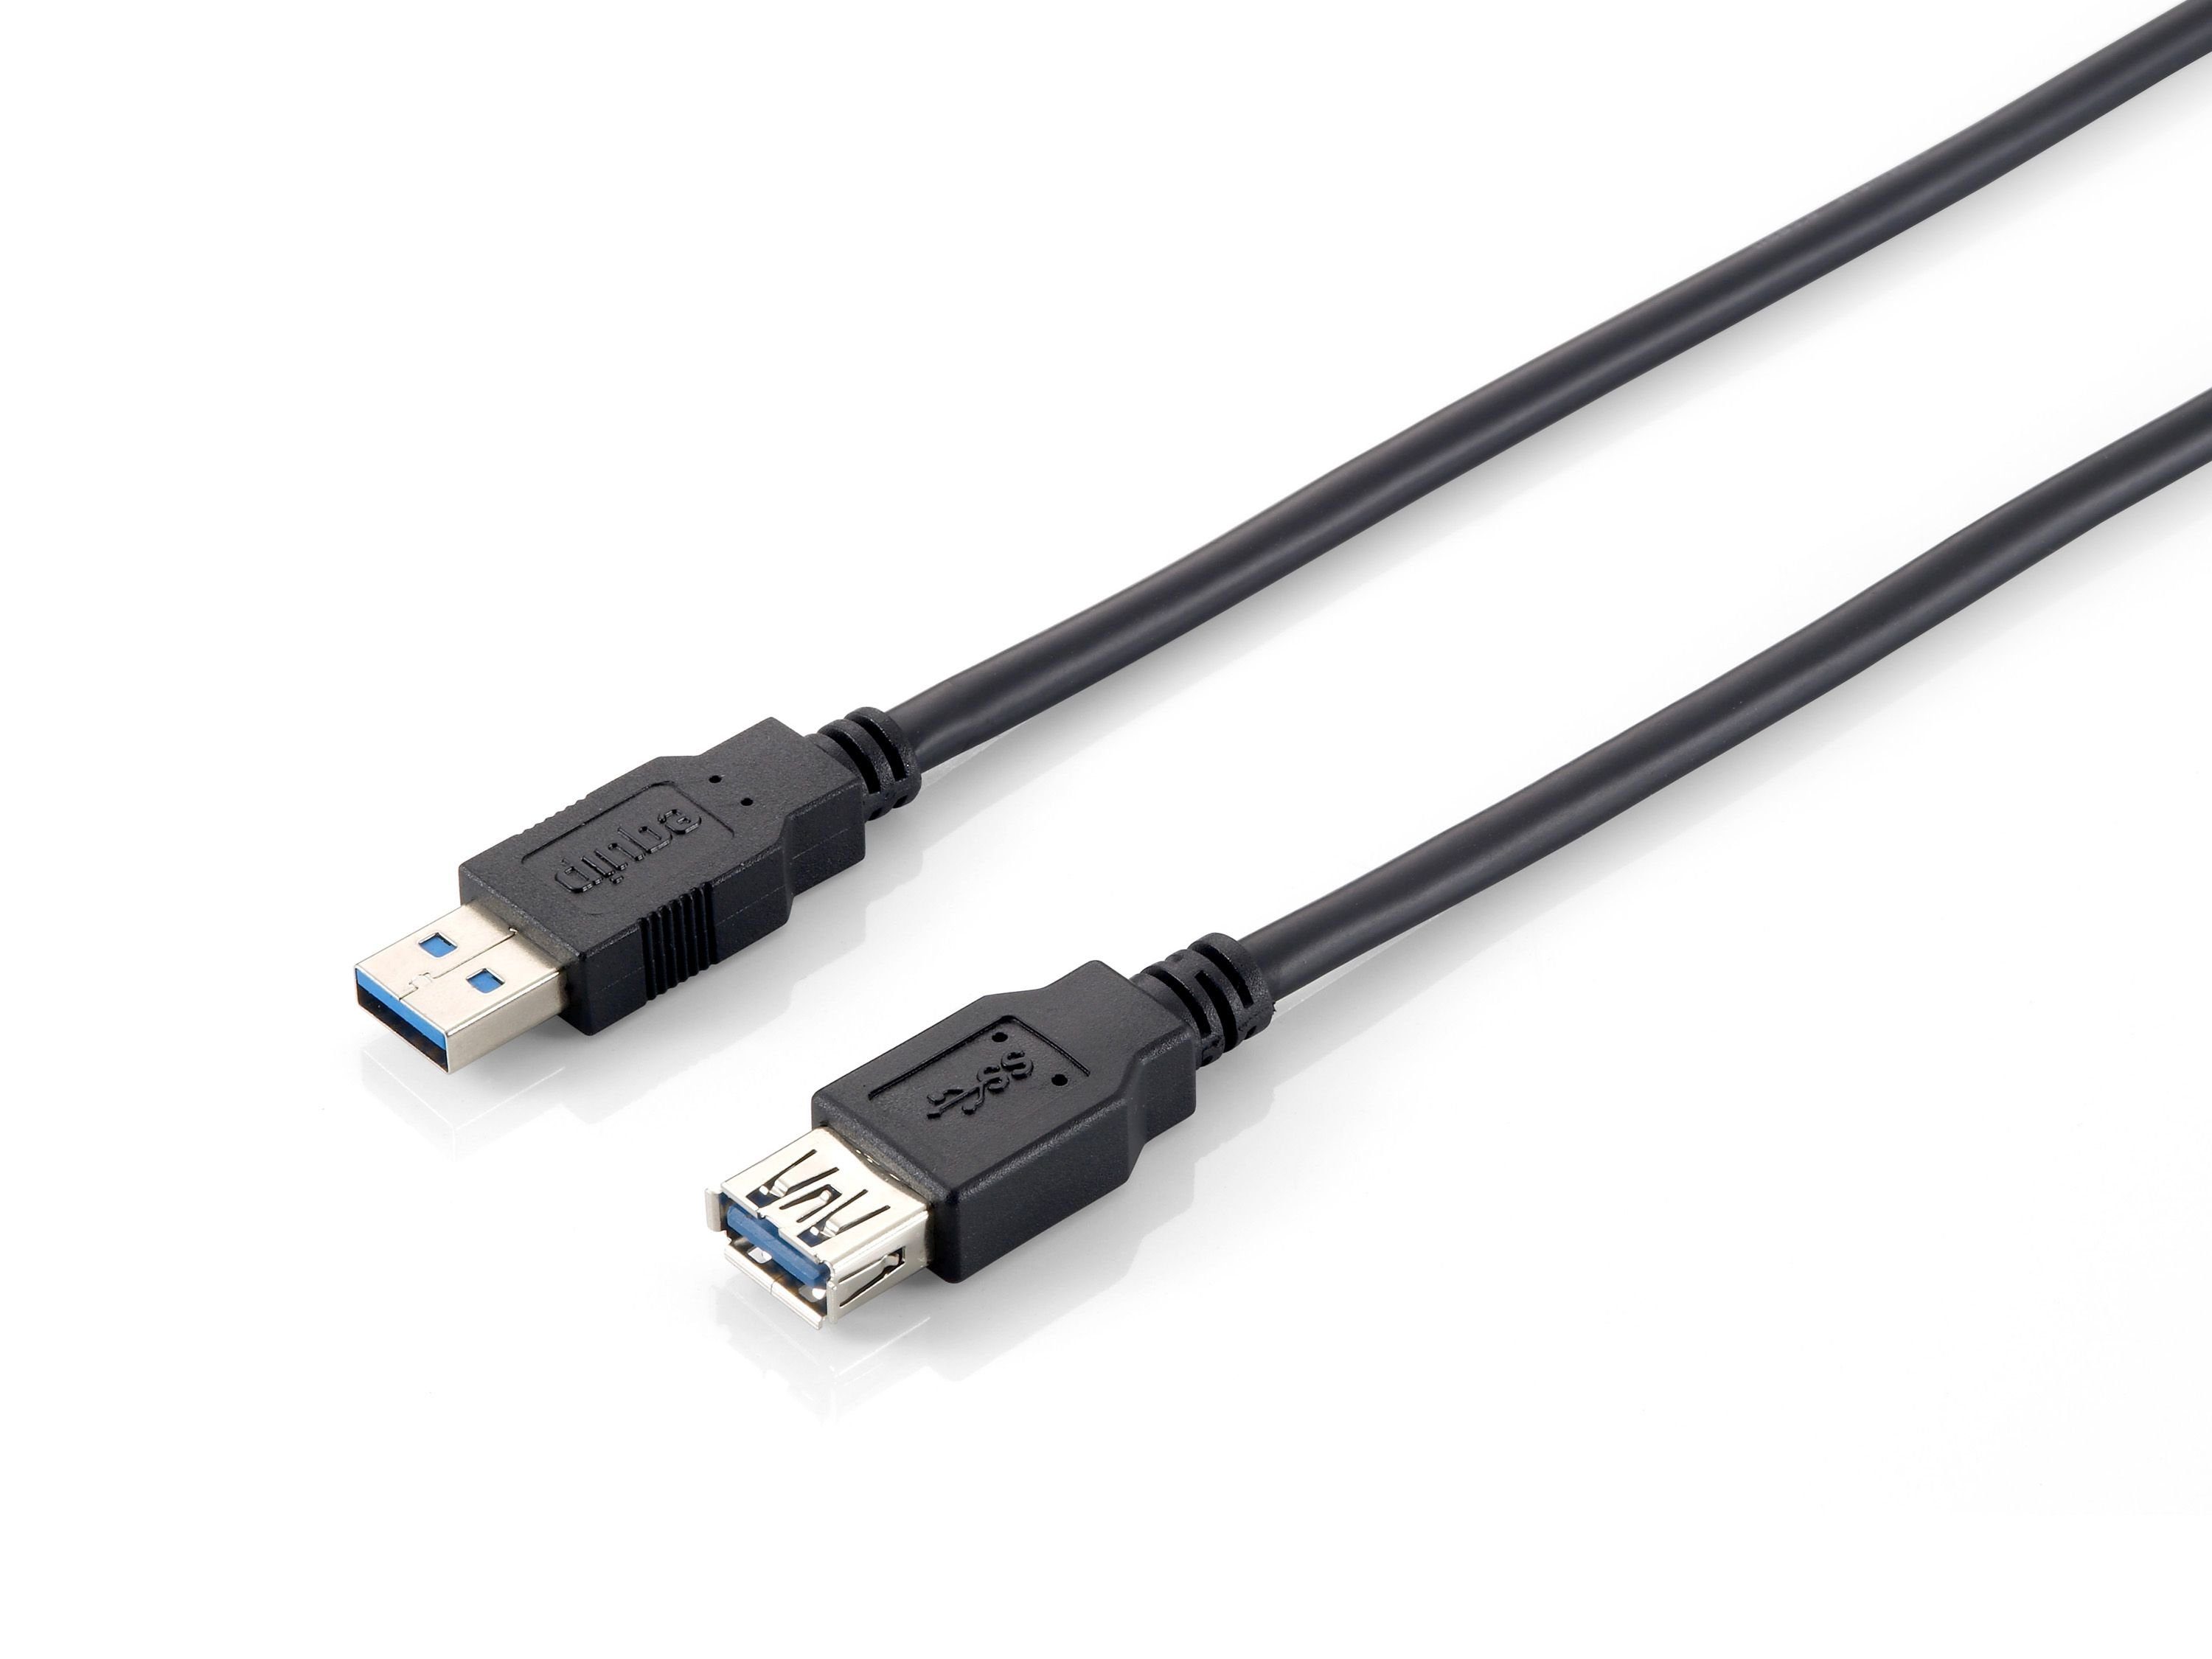 A -> A Equip schwarz 3.0 USB Equip 3.00m Klemmen Kabel St/Bu Polybeute